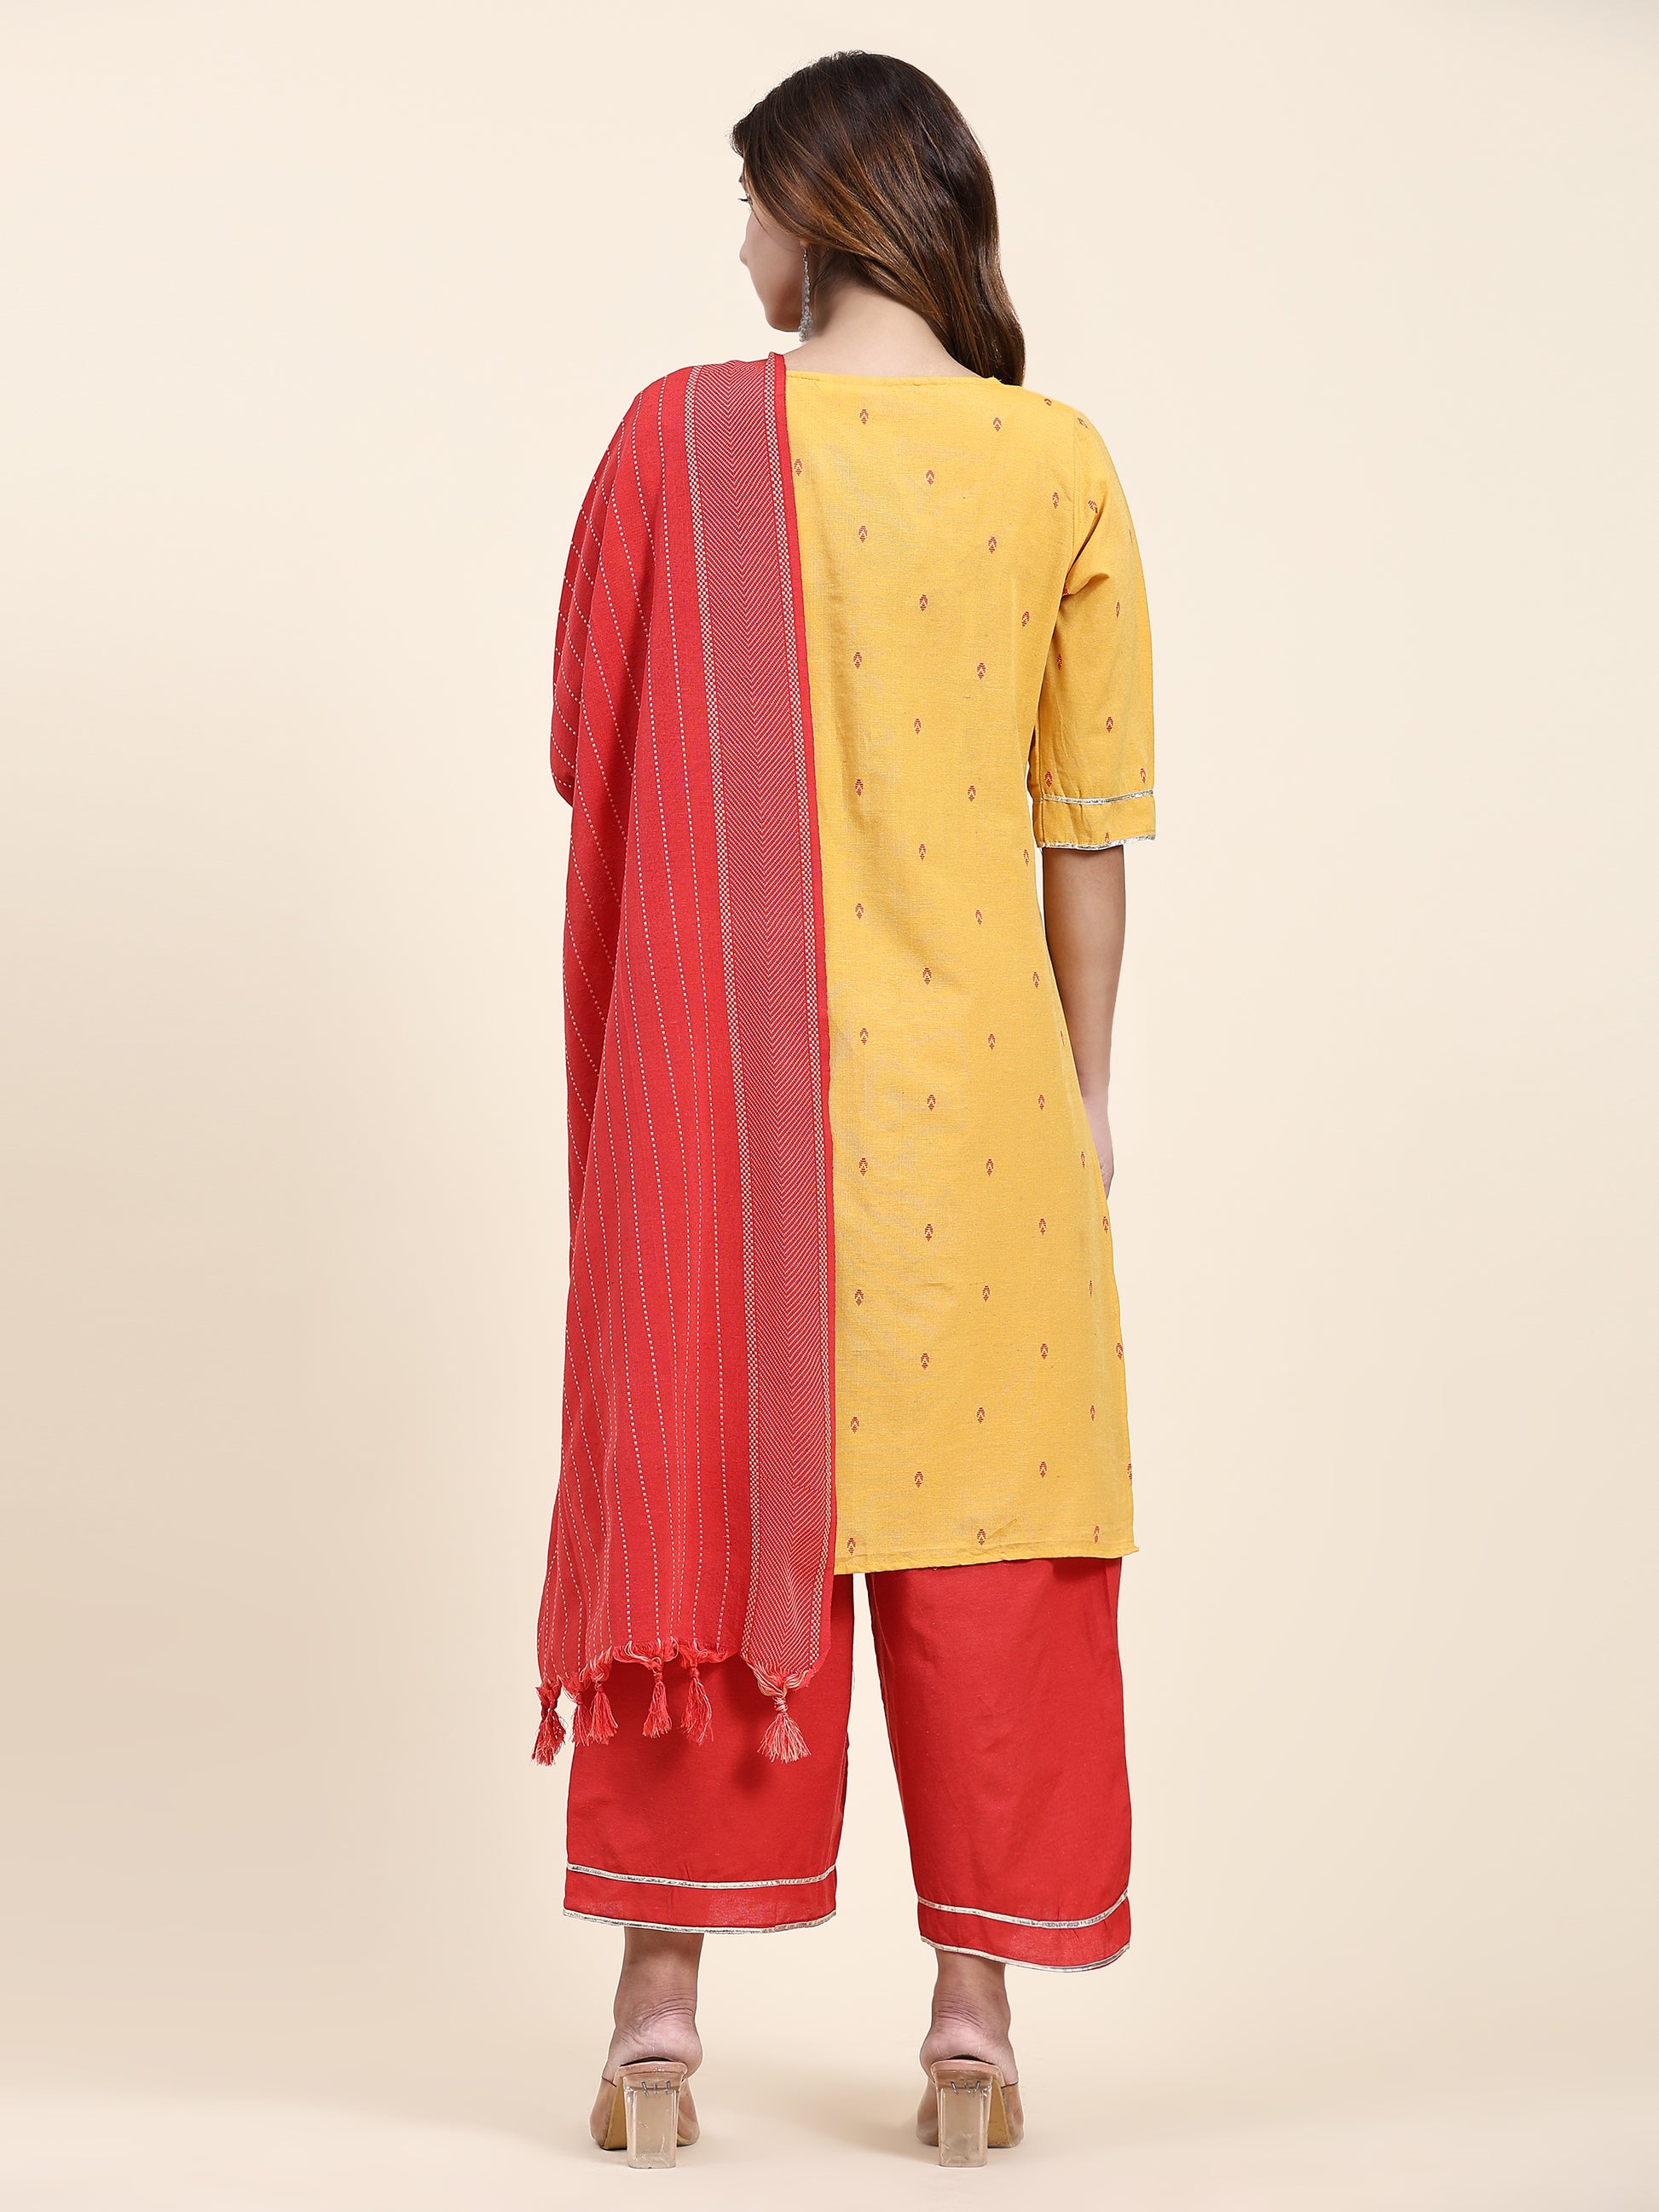 Mustard Yellow Color Cotton Fabric 3/4th Sleeves Long Kurti